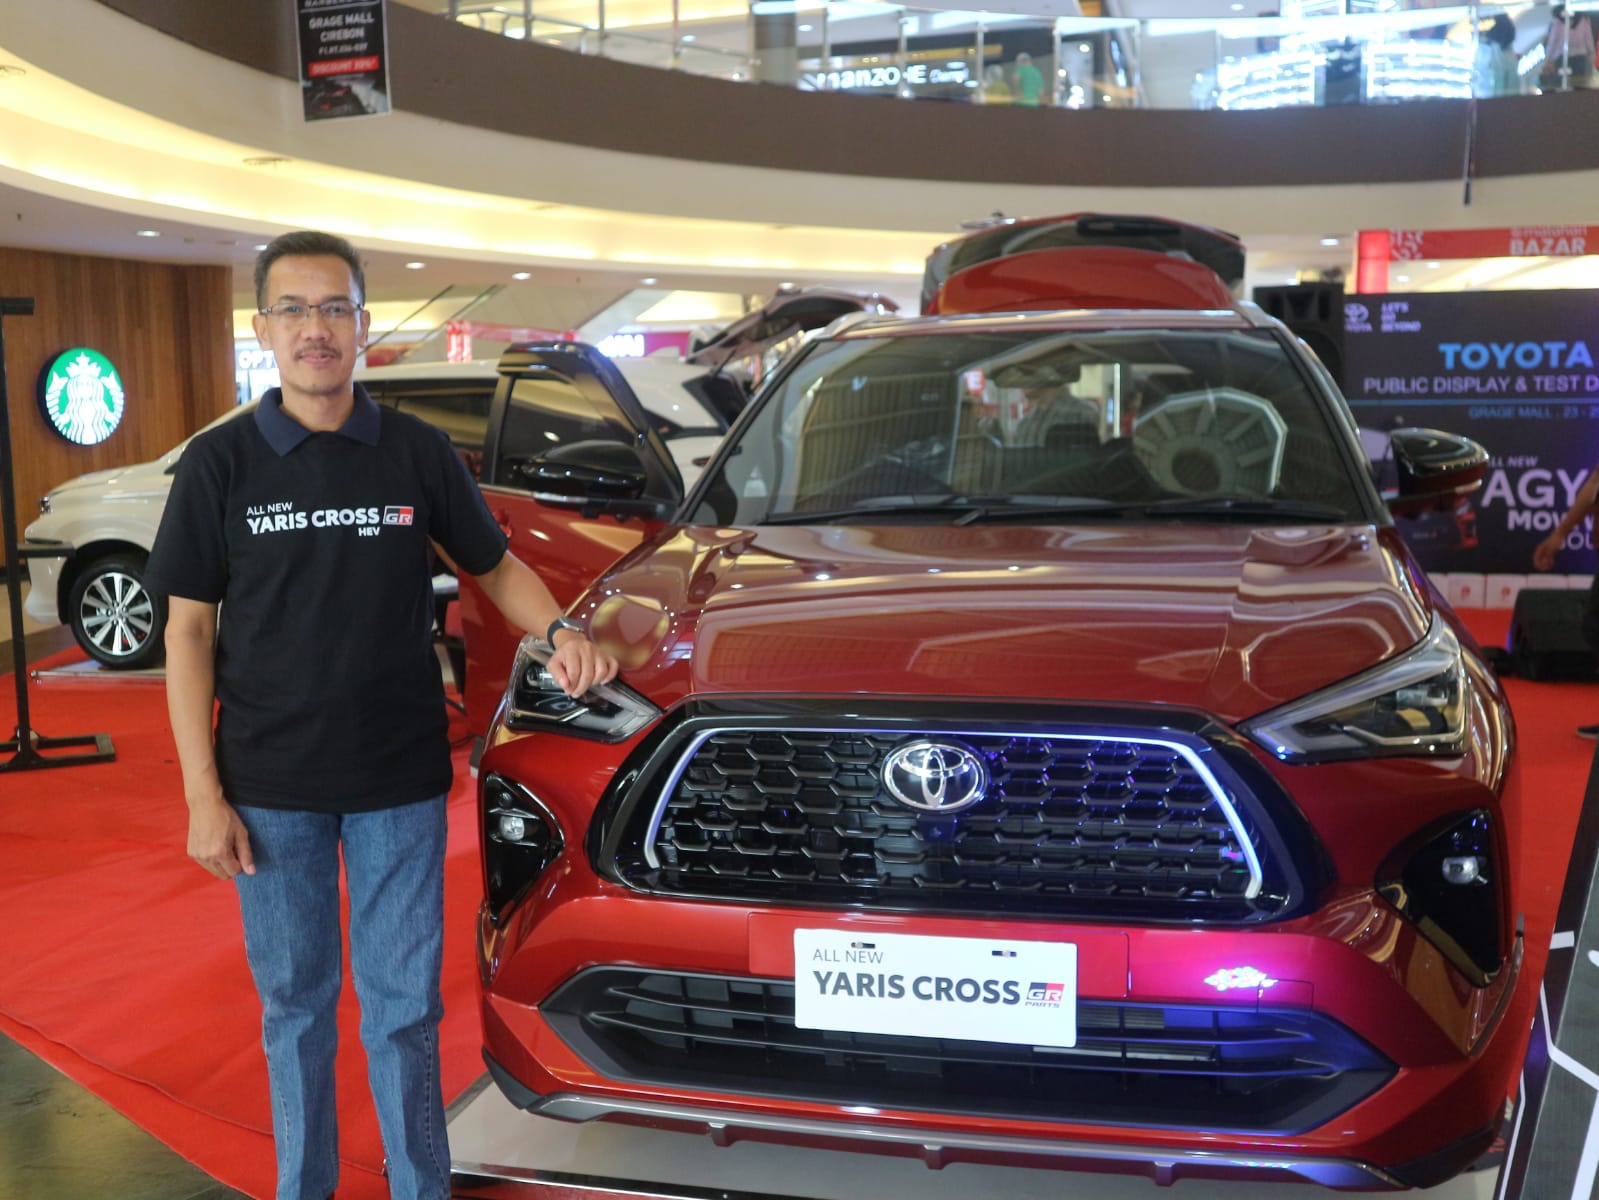 Toyota Expo 3 hari di Kota Cirebon, Bisa Test Drive All New Agya hingga Innova Zenix